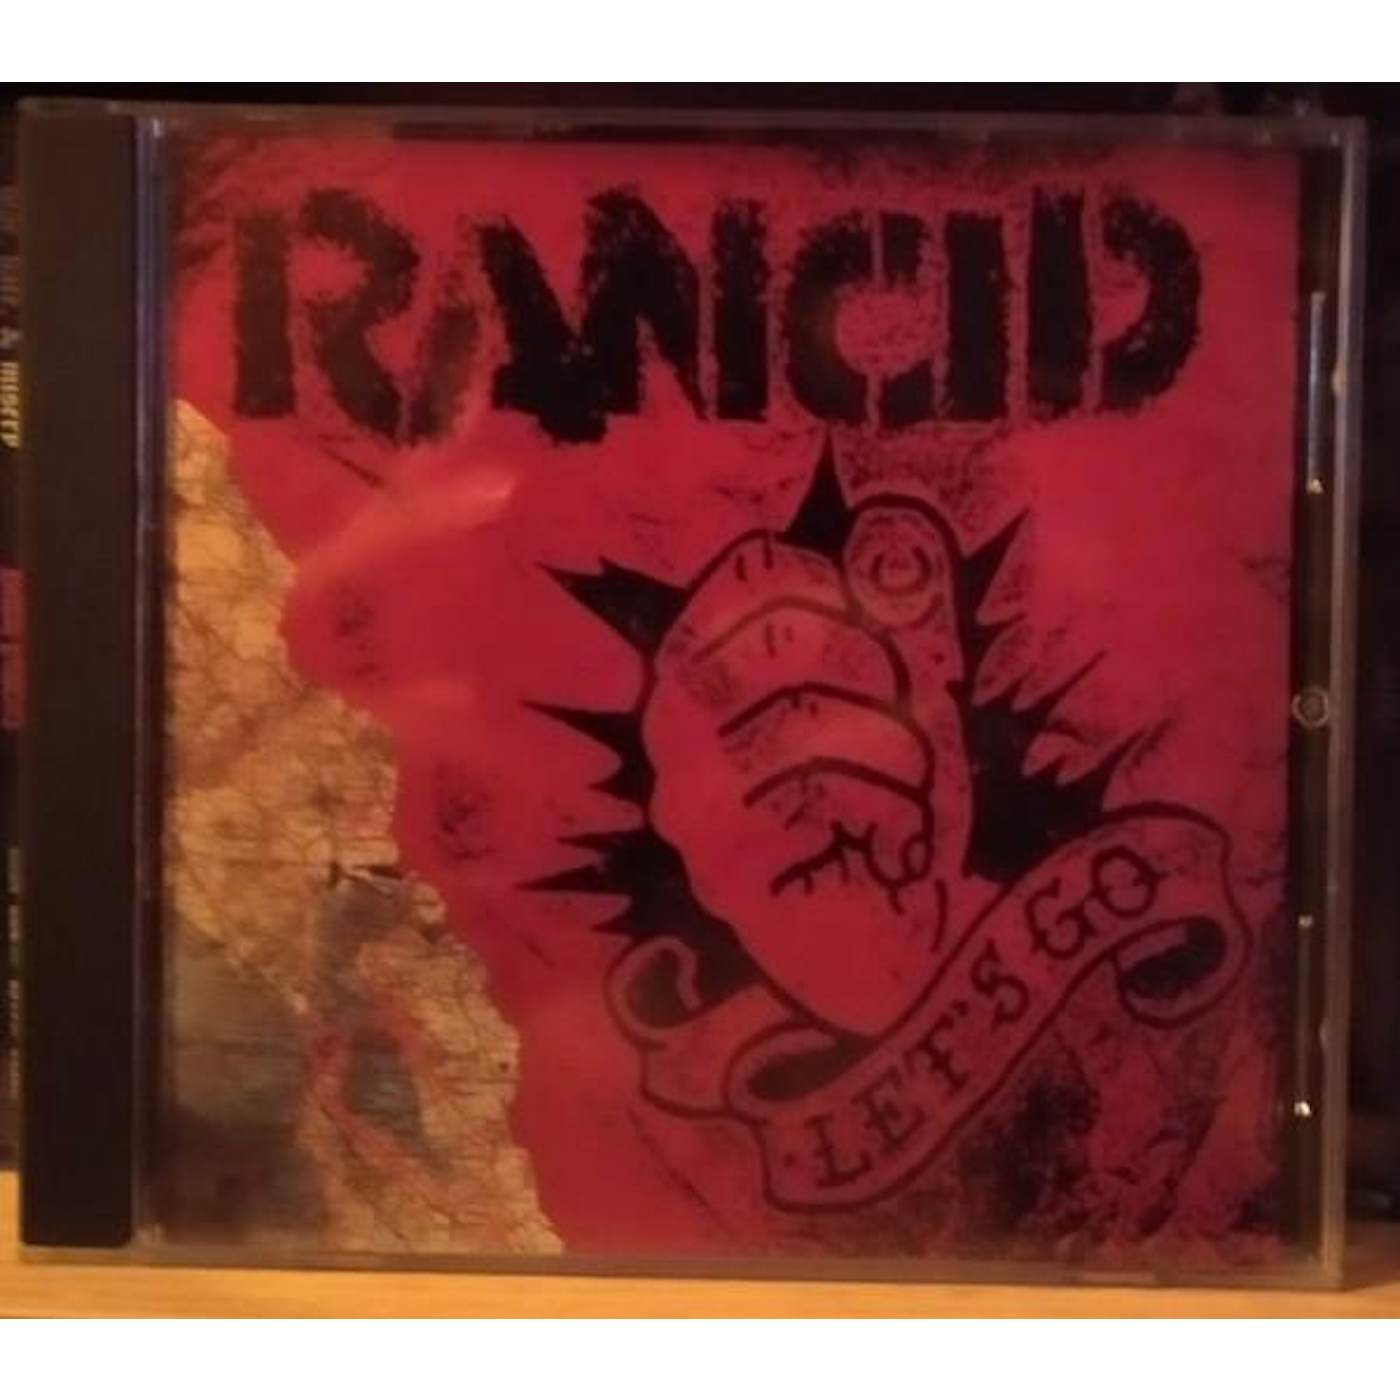 Rancid LET'S GO CD